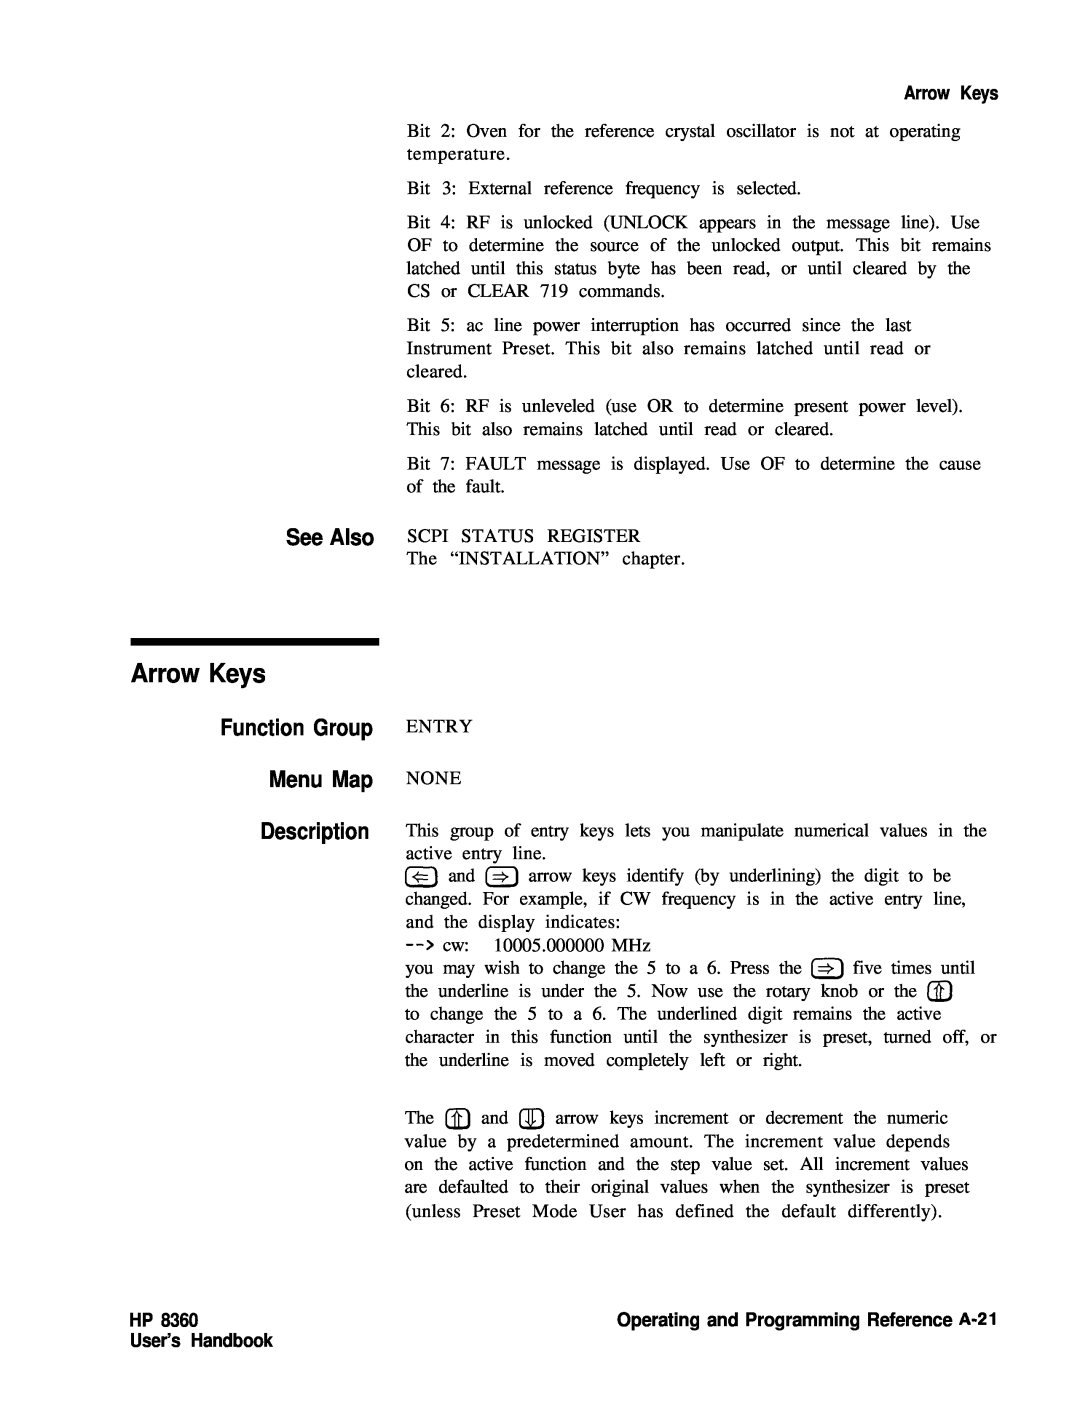 HP 24A, 83620A, 22A manual Arrow Keys, See Also, Function Group Menu Map Description, User’s Handbook 